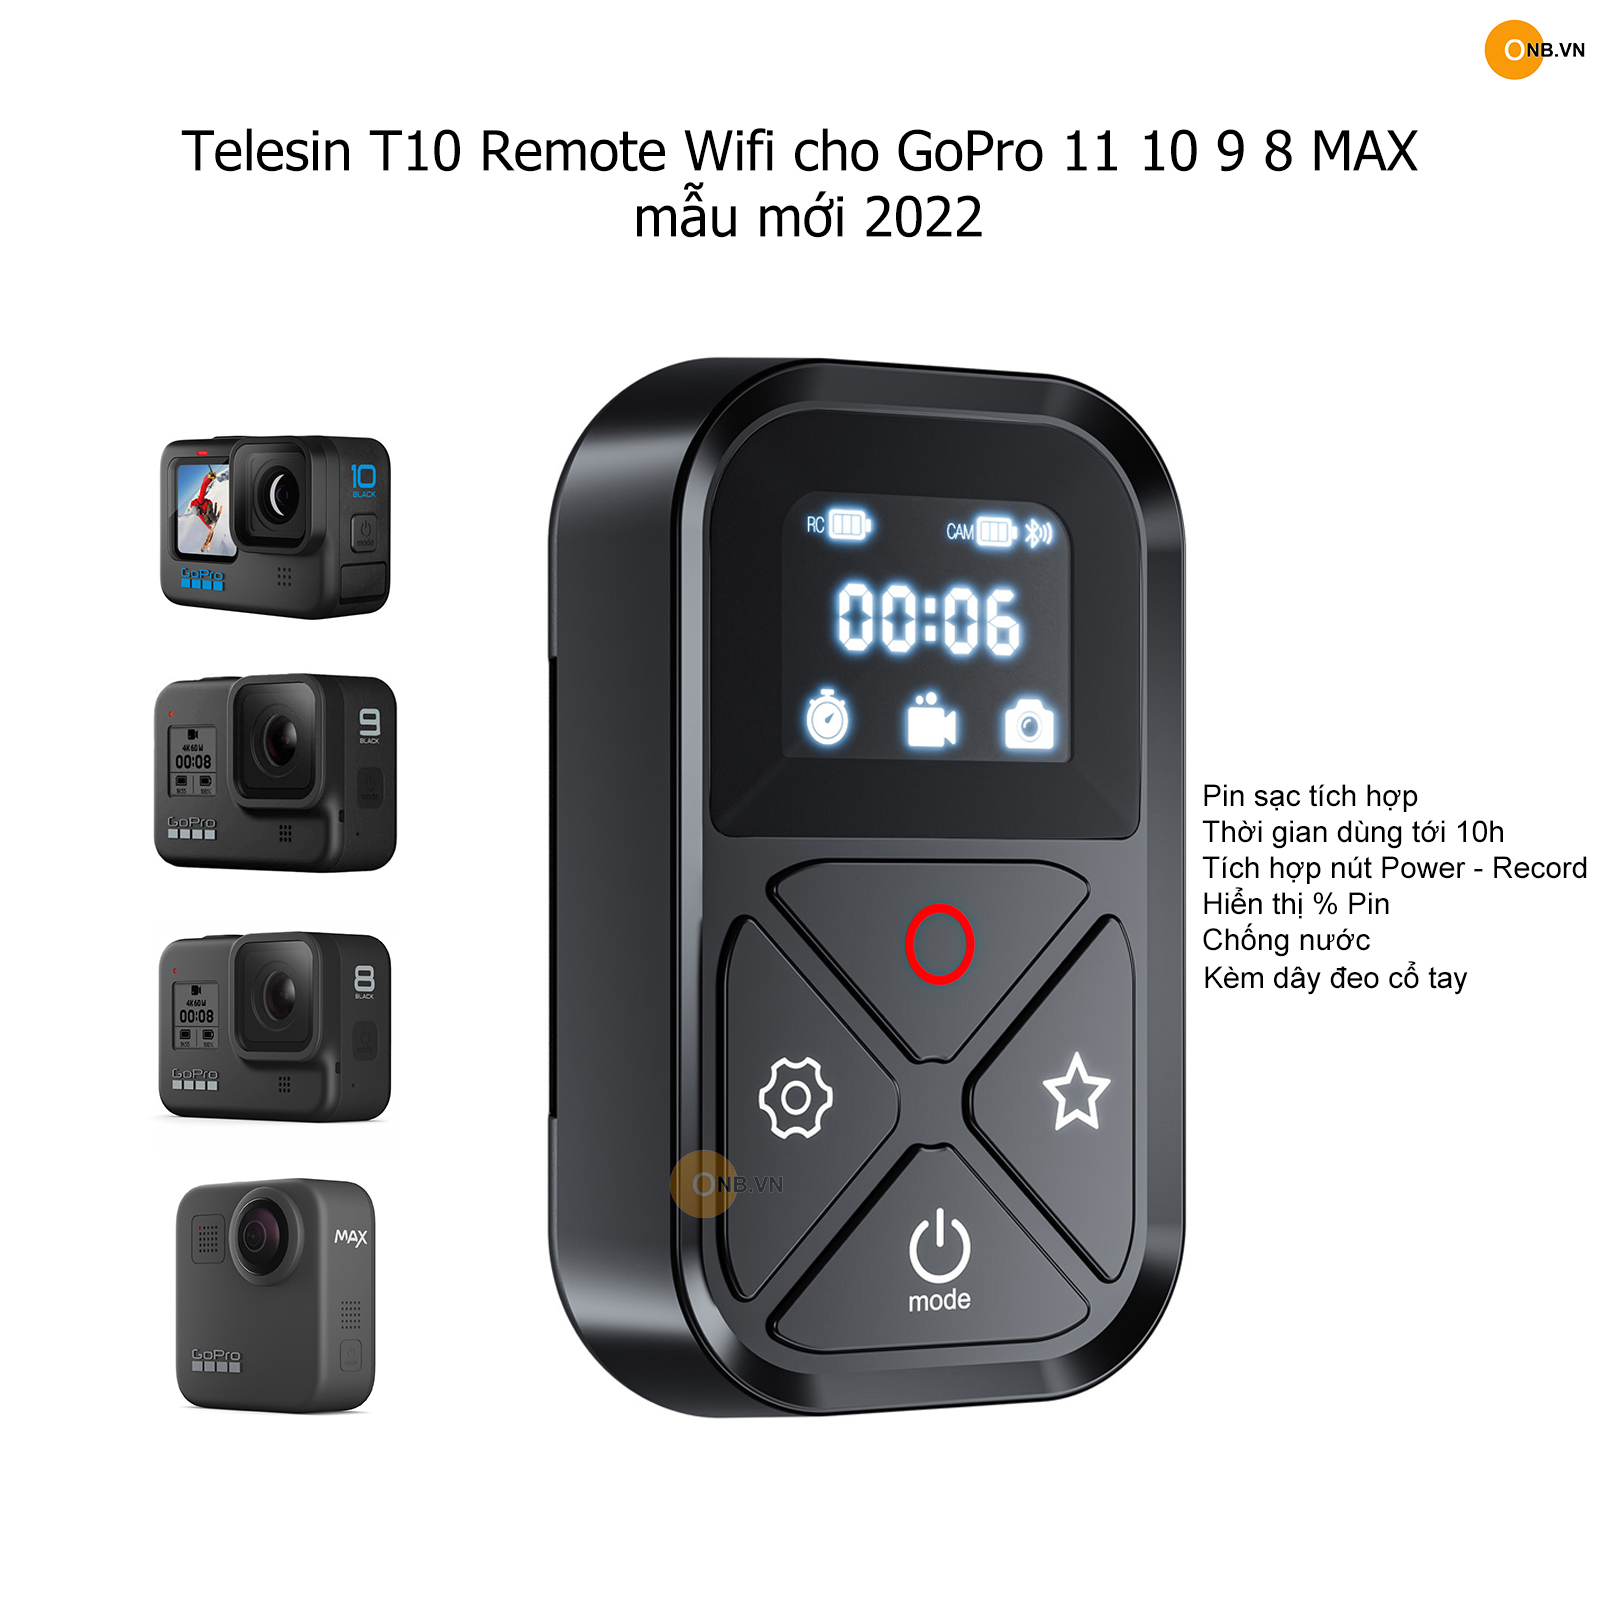 Telesin T10 Remote cho GoPro 11 10 9 8 MAX mẫu mới 2023